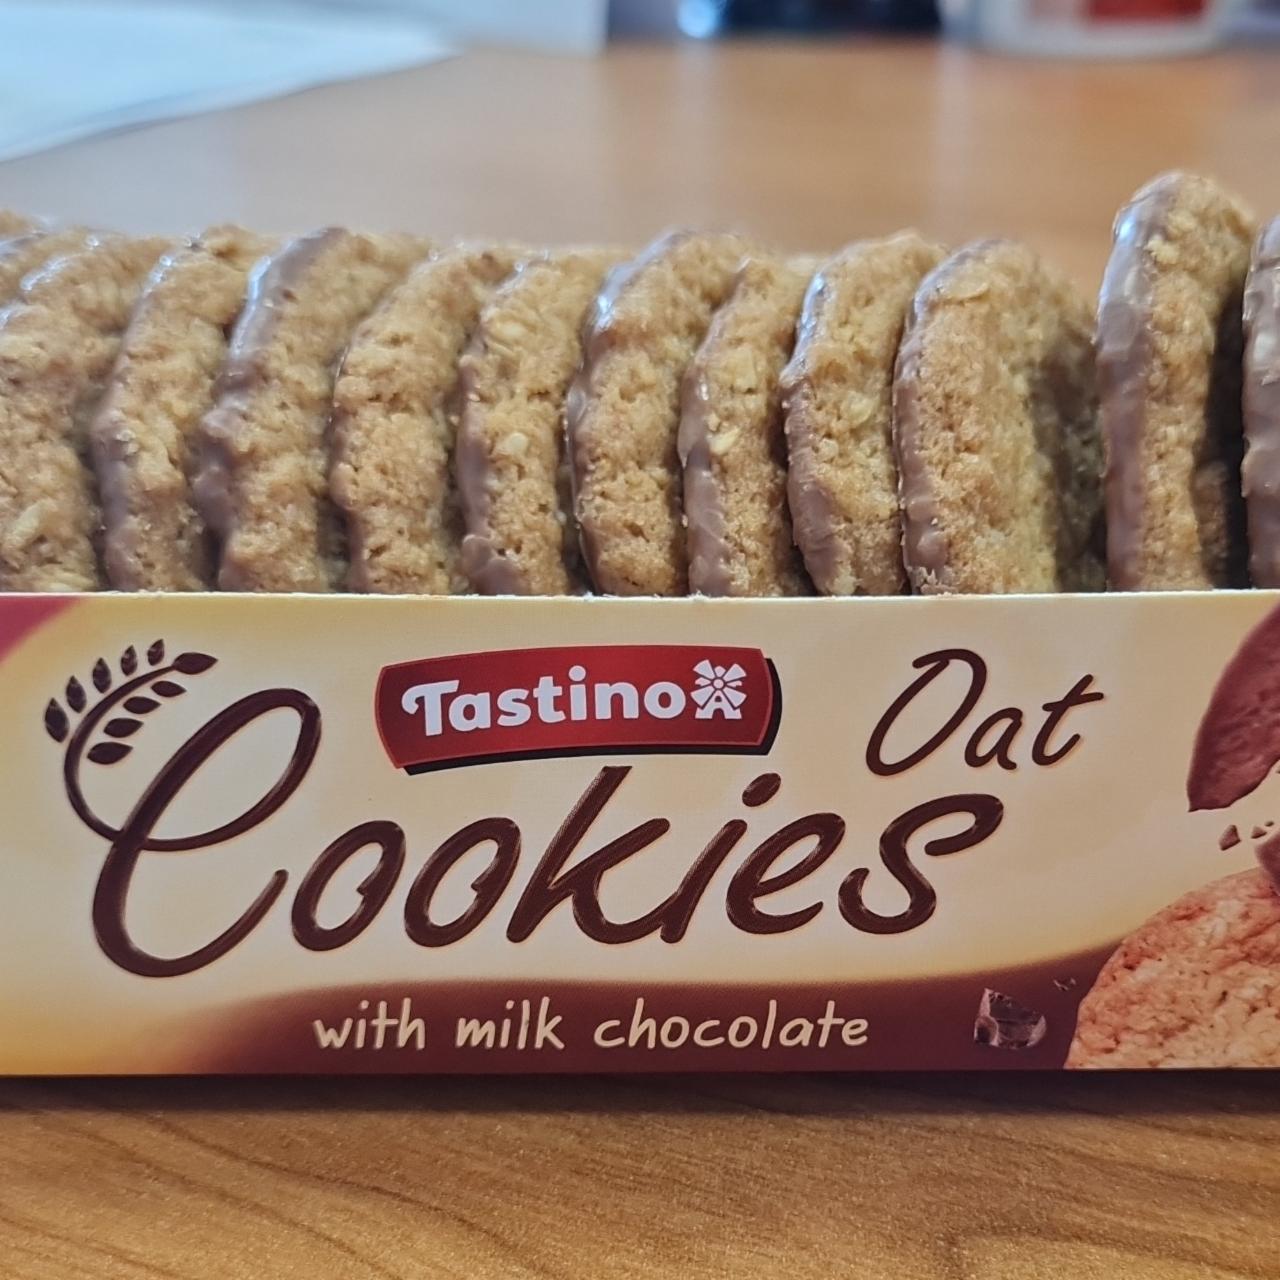 Fotografie - Oat Cookies with milk chocolate Tastino